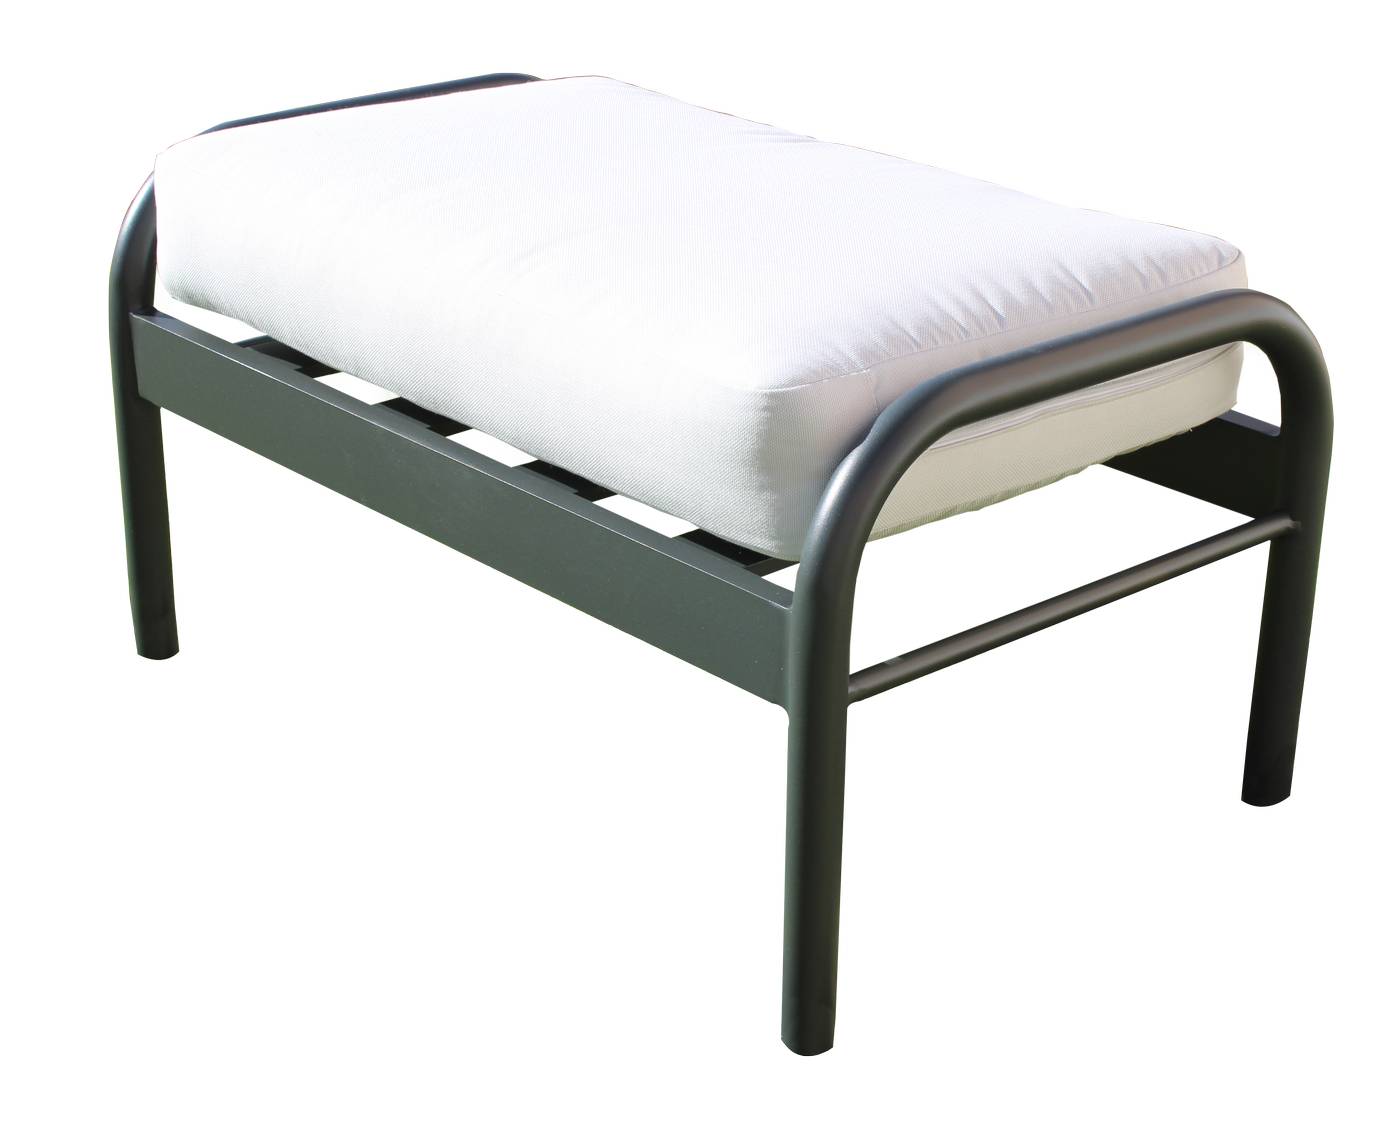 Set Aluminio Alexis-10 - Conjunto: 1 sofá 3 plazas + 2 sillones + 1 mesa de centro + 2 taburetes/repoaspiés. Estructura aluminio color blanco o antracita.